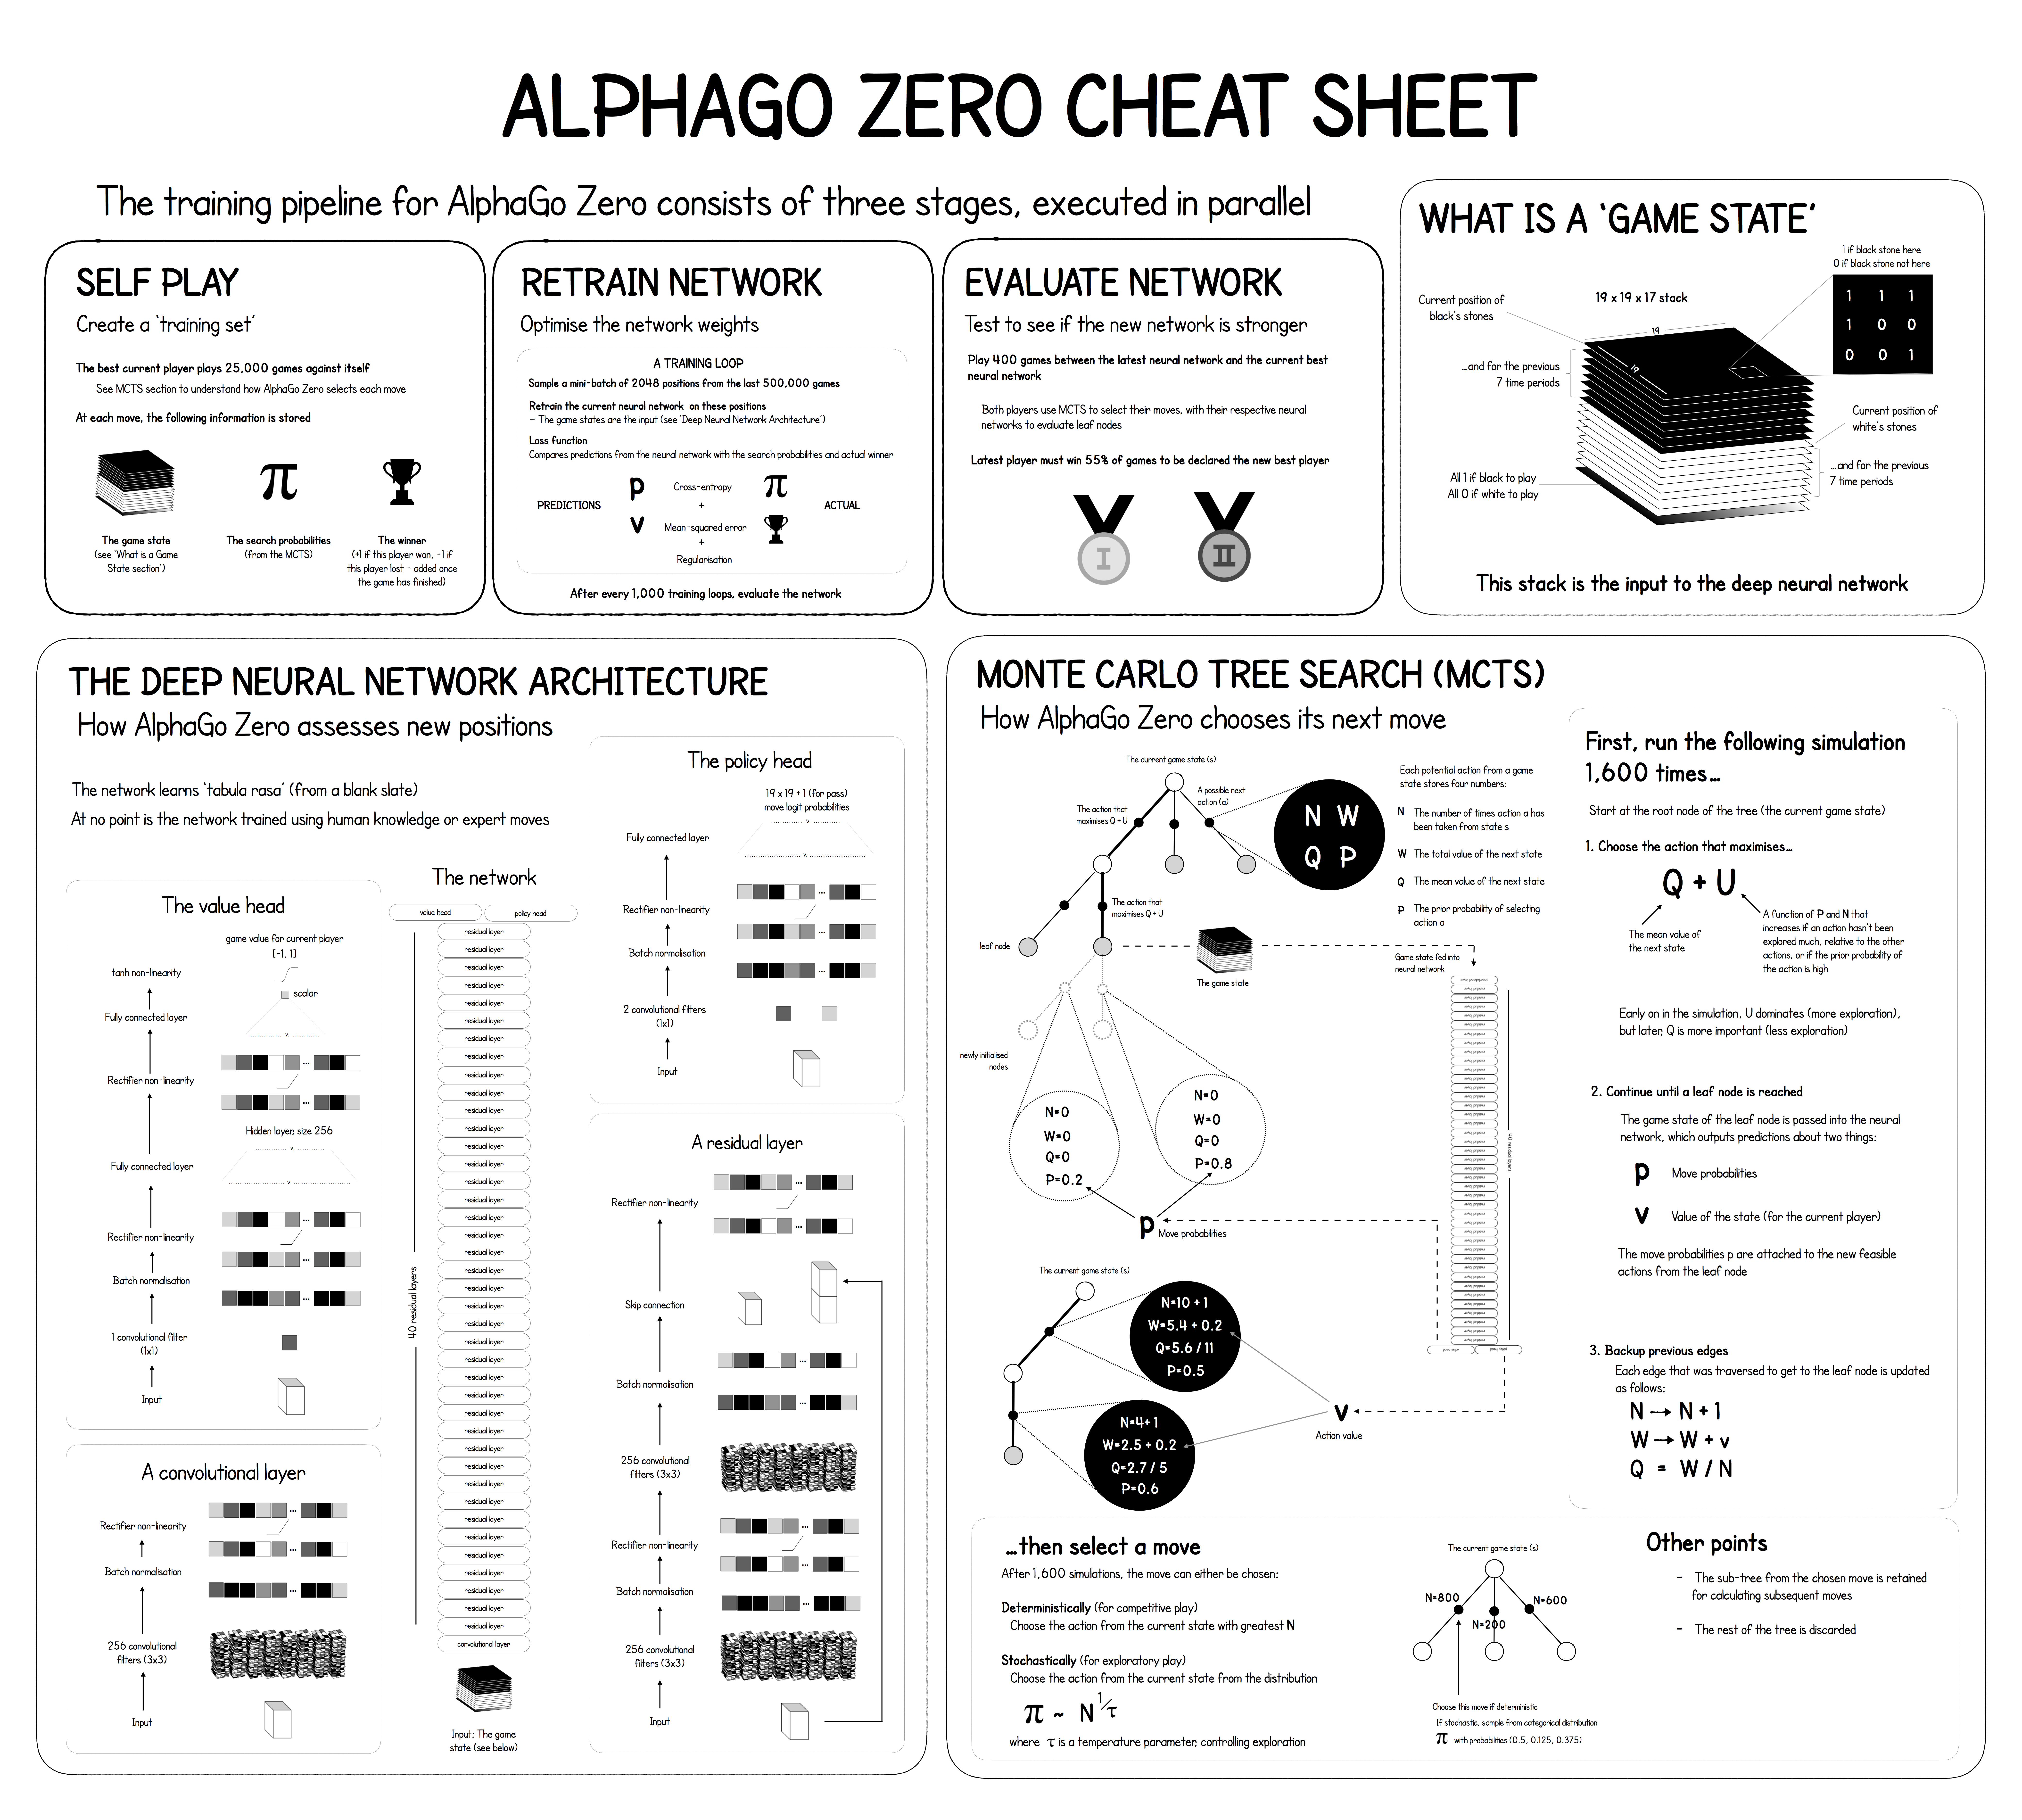 alpha_go_zero_cheat_sheet.png